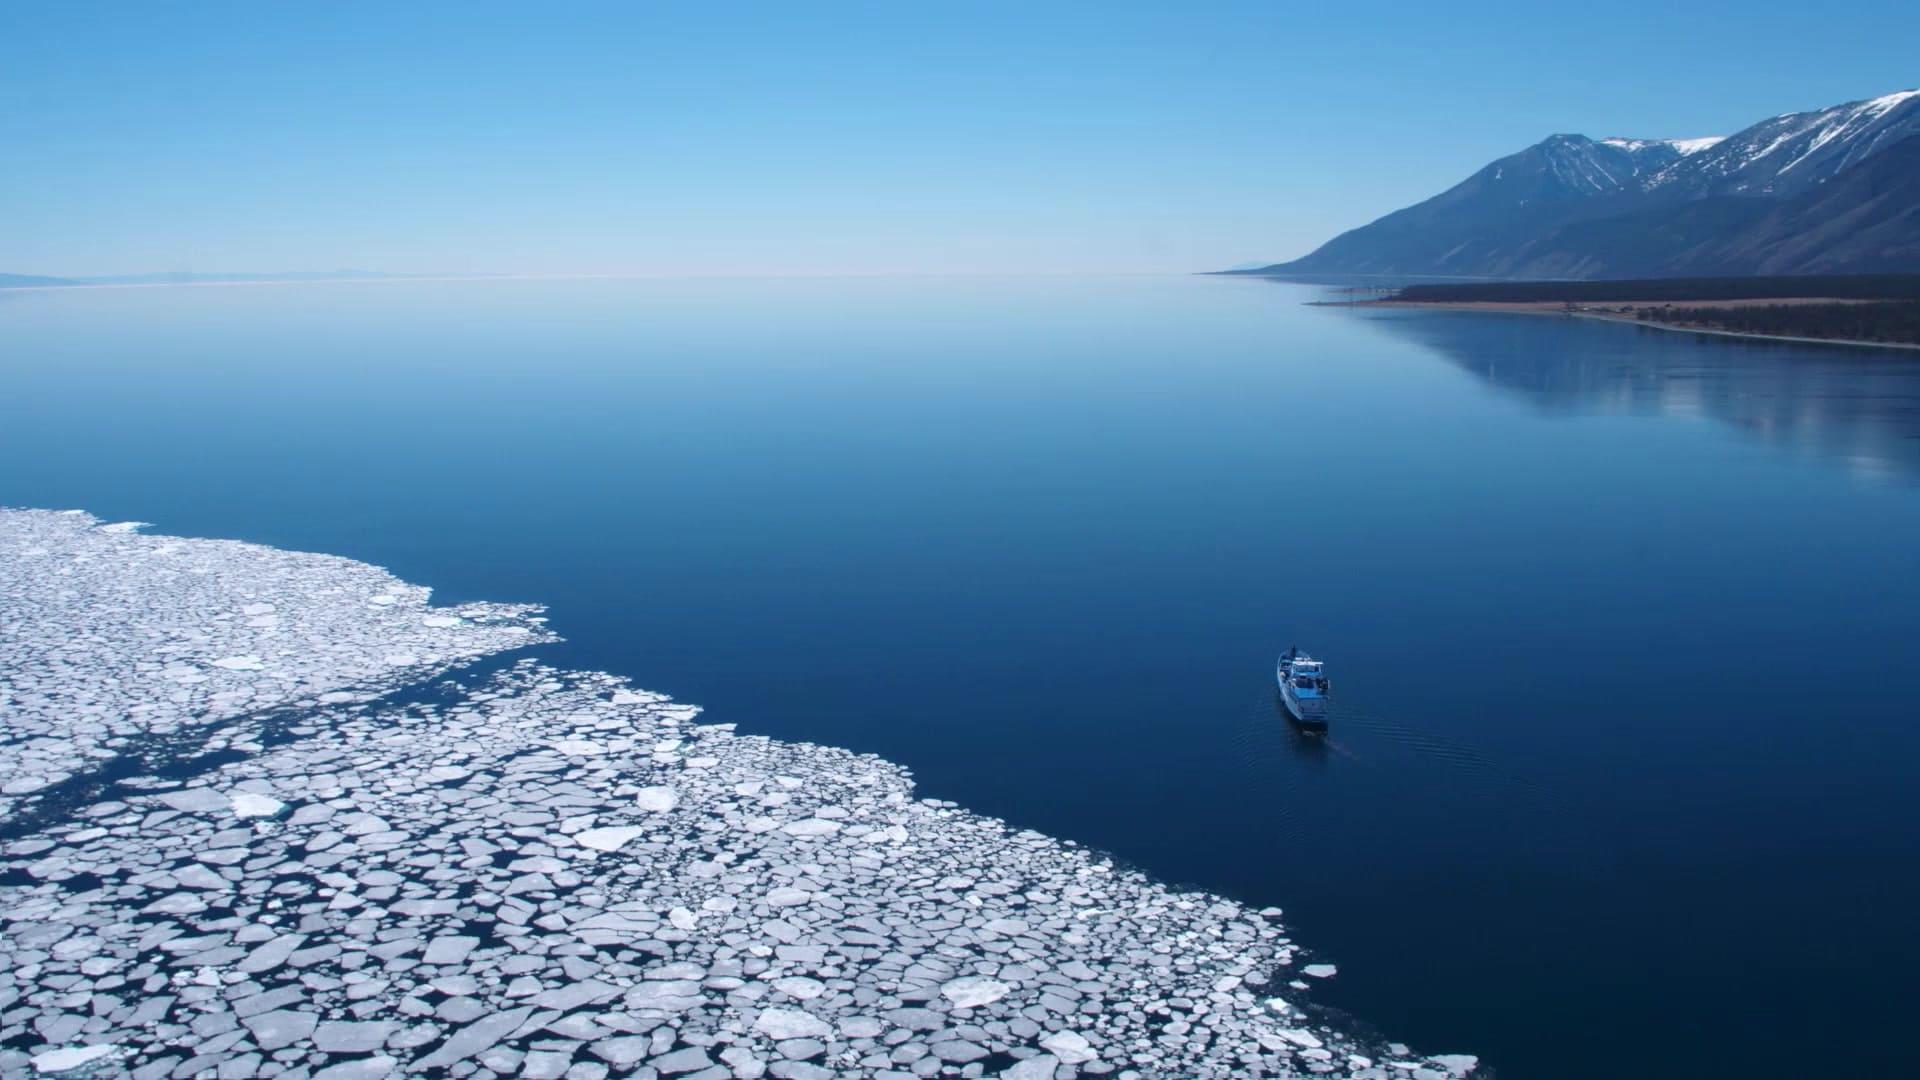 Baikal: The Heart of the World 3D backdrop